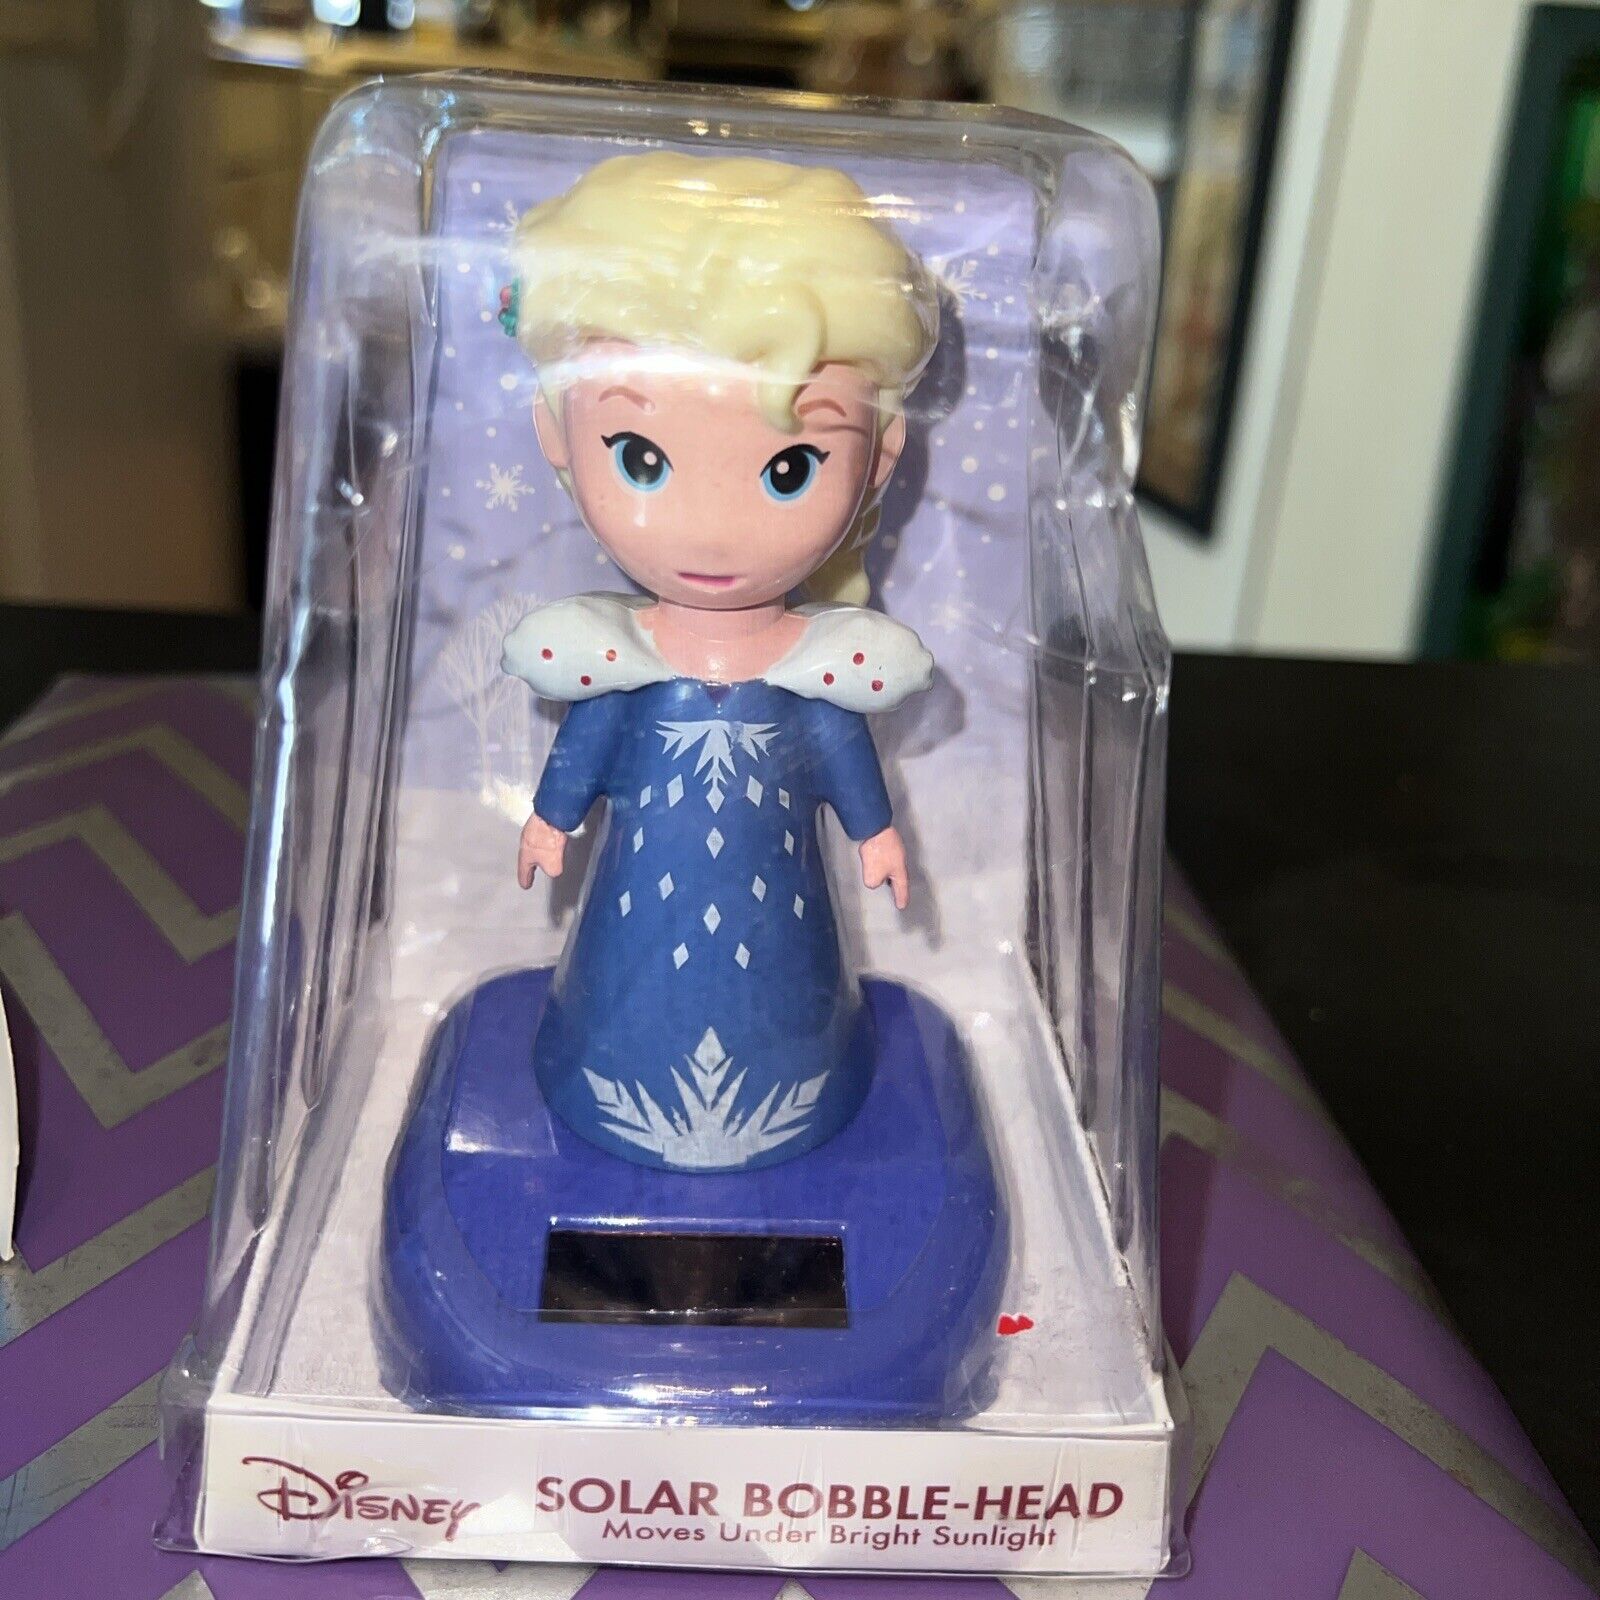 Solar Powered Dancing Bobble Head Toy New - Disney Frozen~Elsa